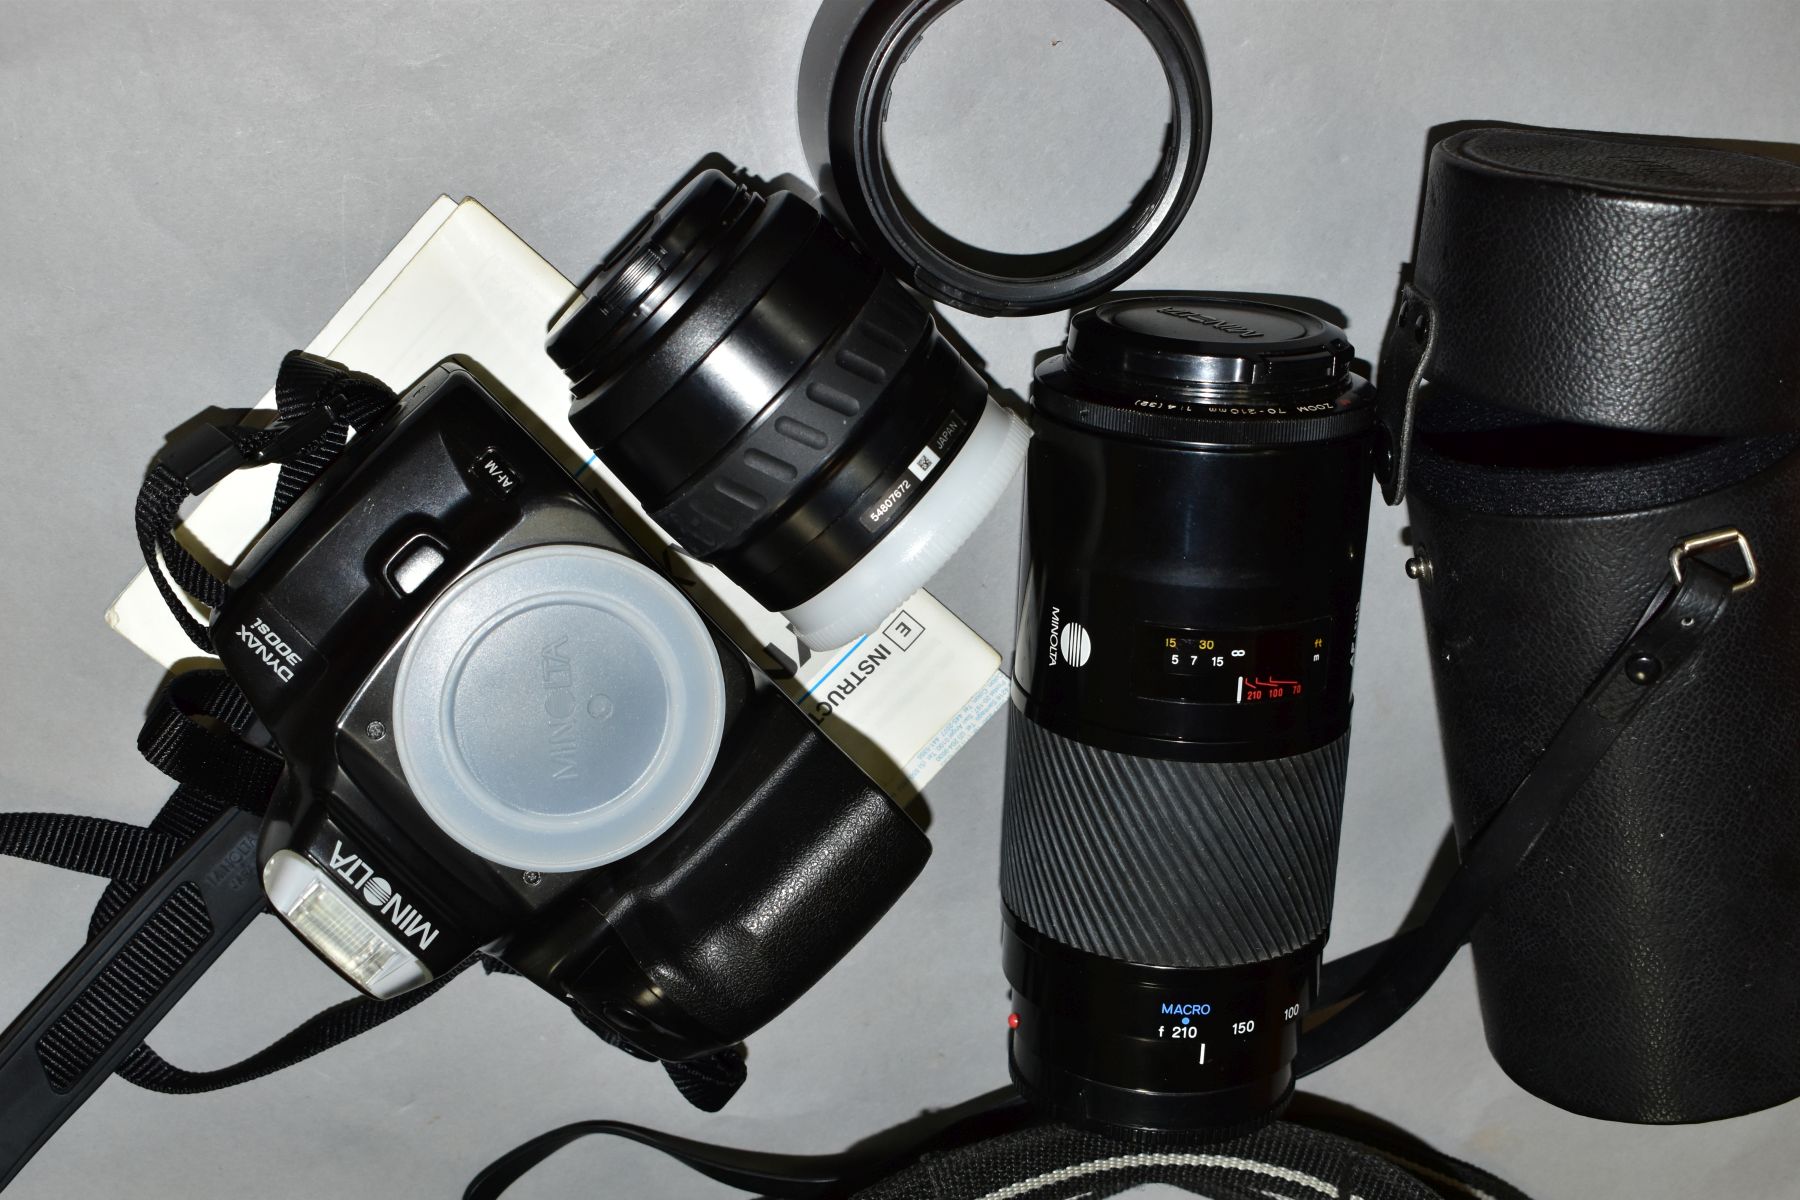 PHOTOGRAPHIC EQUIPMENT comprising a Minolta Dynax 300SI camera body, Minolta 35-70 zoom lens, - Image 6 of 9